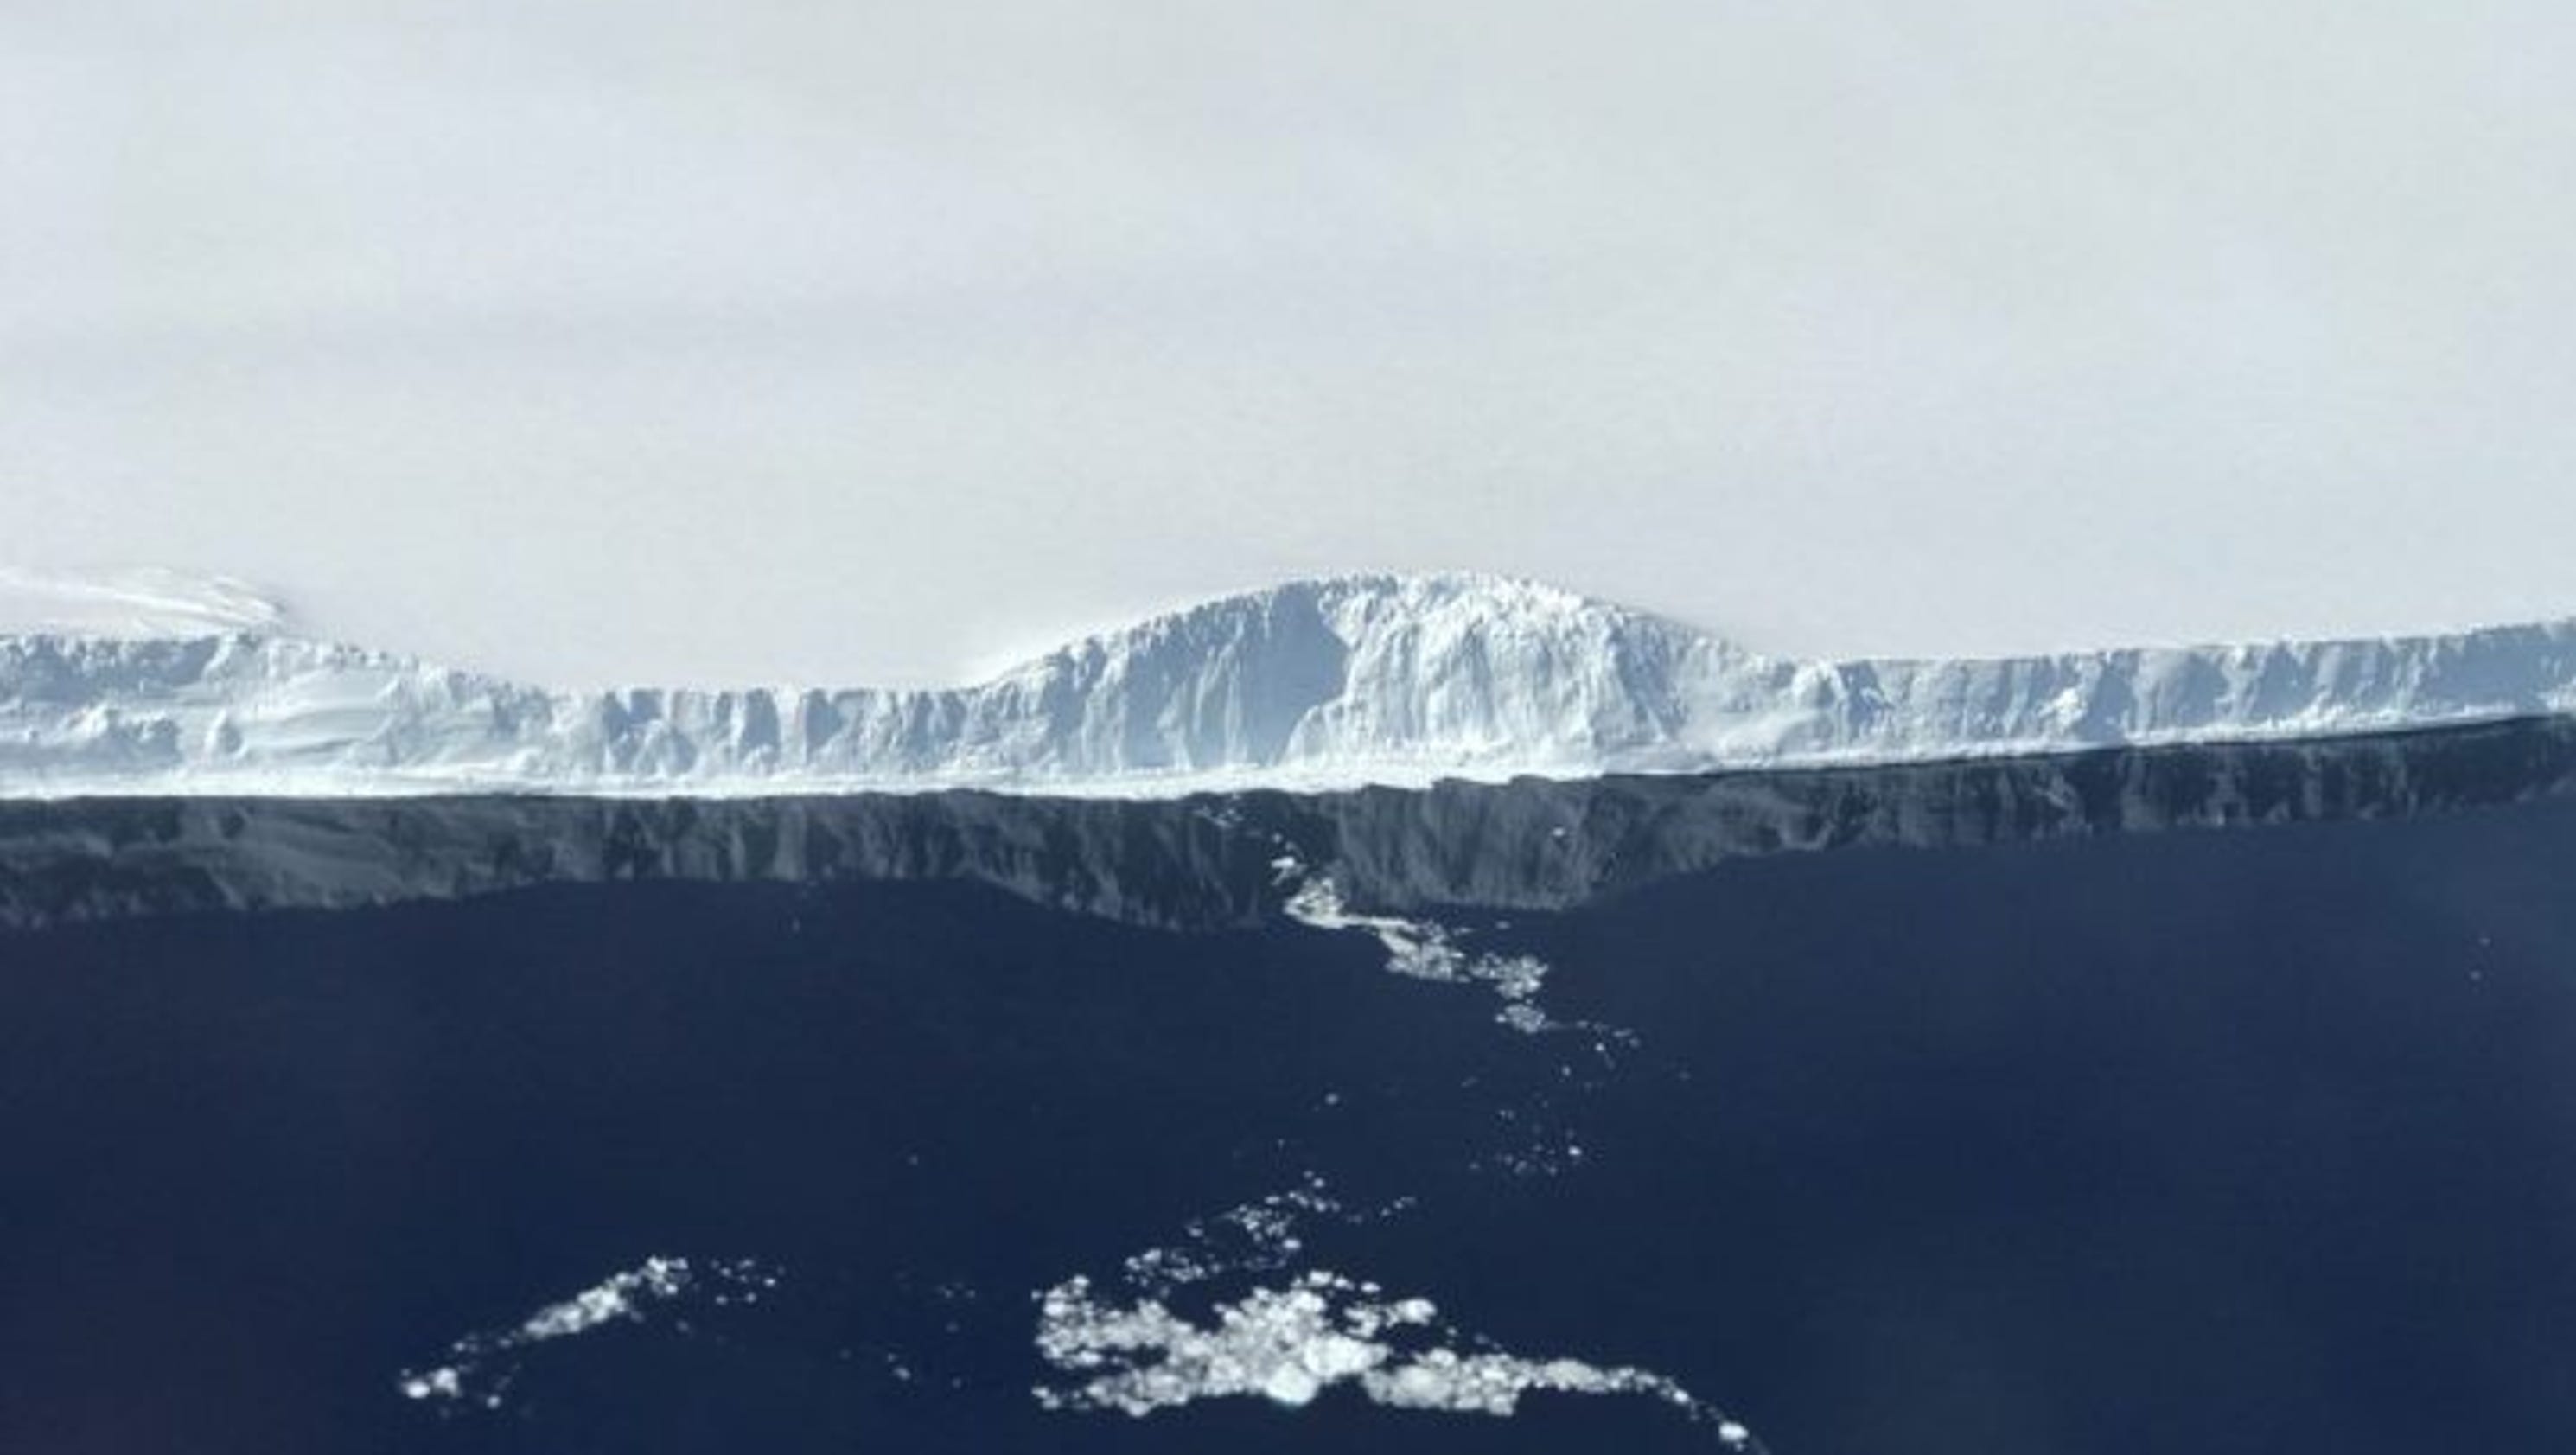 antarctica iceberg breaks